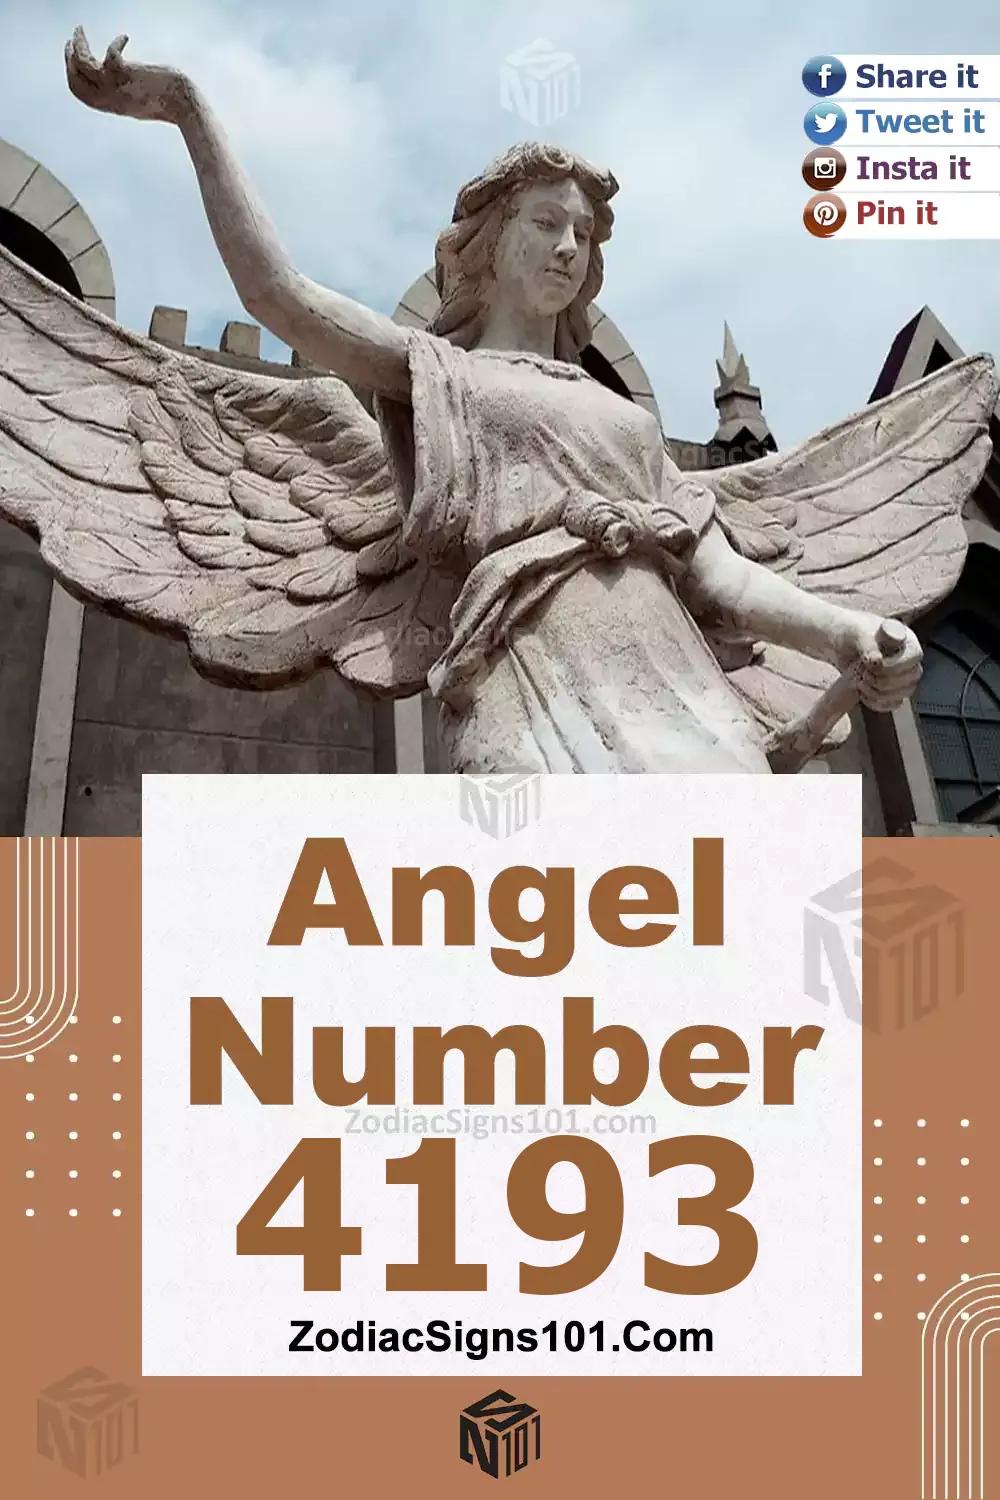 4193-Angel-Number-Meaning.jpg